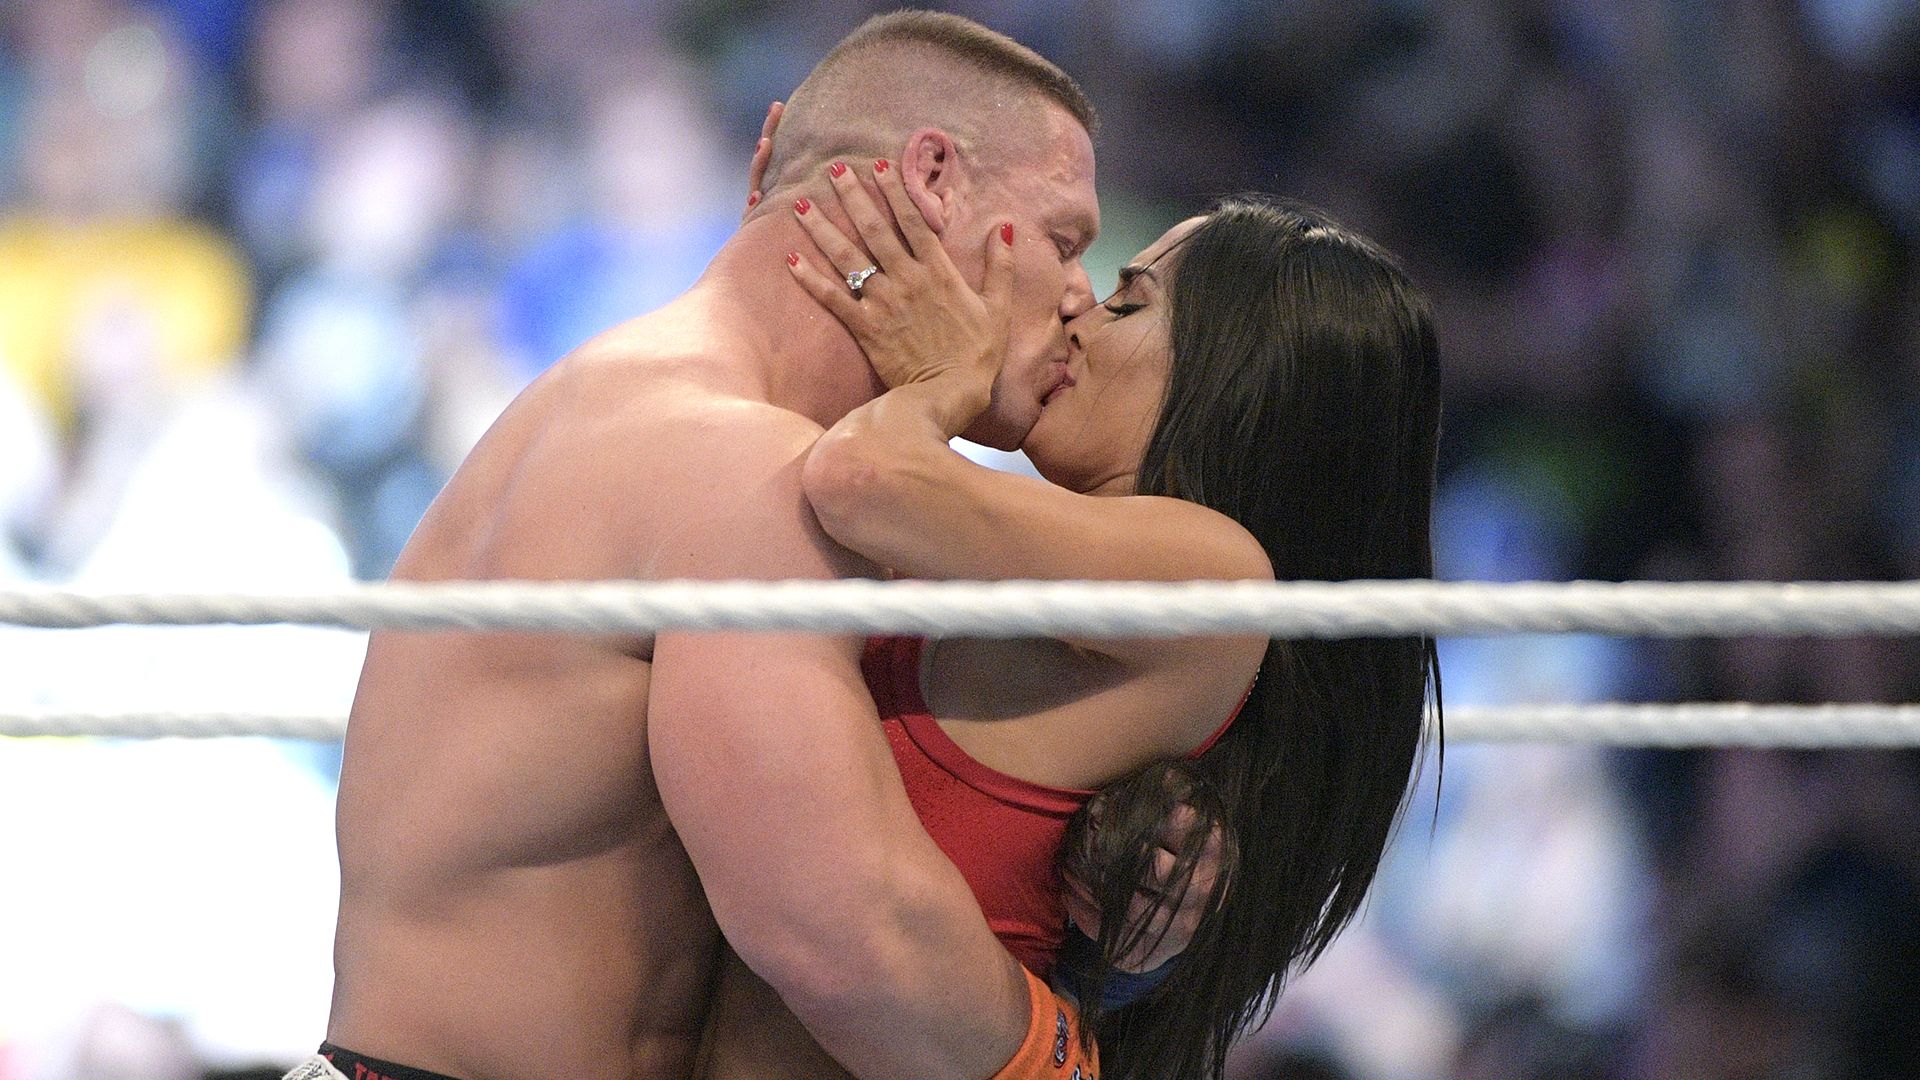 John Cena pops the question to Nikki Bella at WrestleMania 33